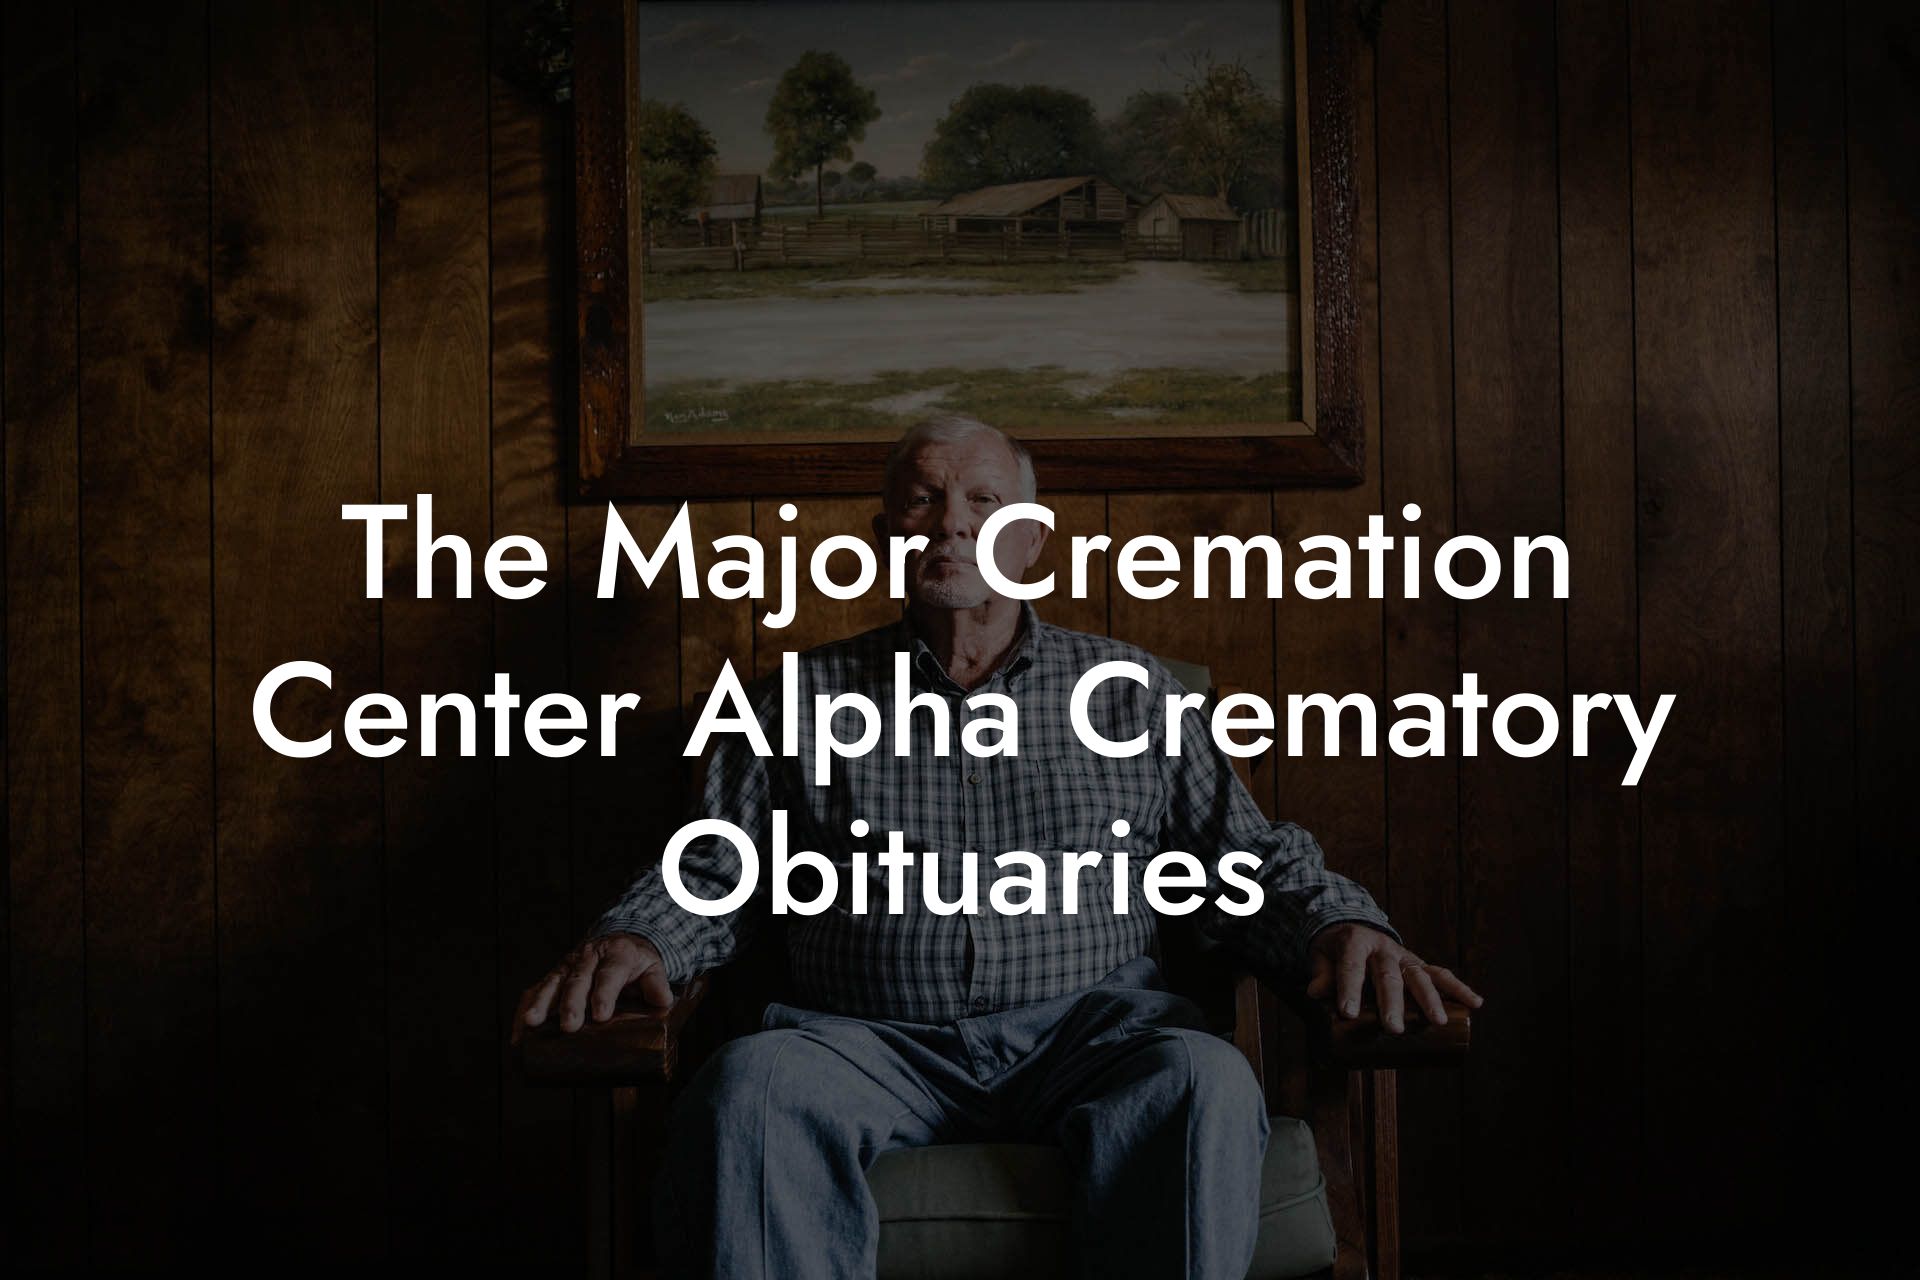 The Major Cremation Center Alpha Crematory Obituaries